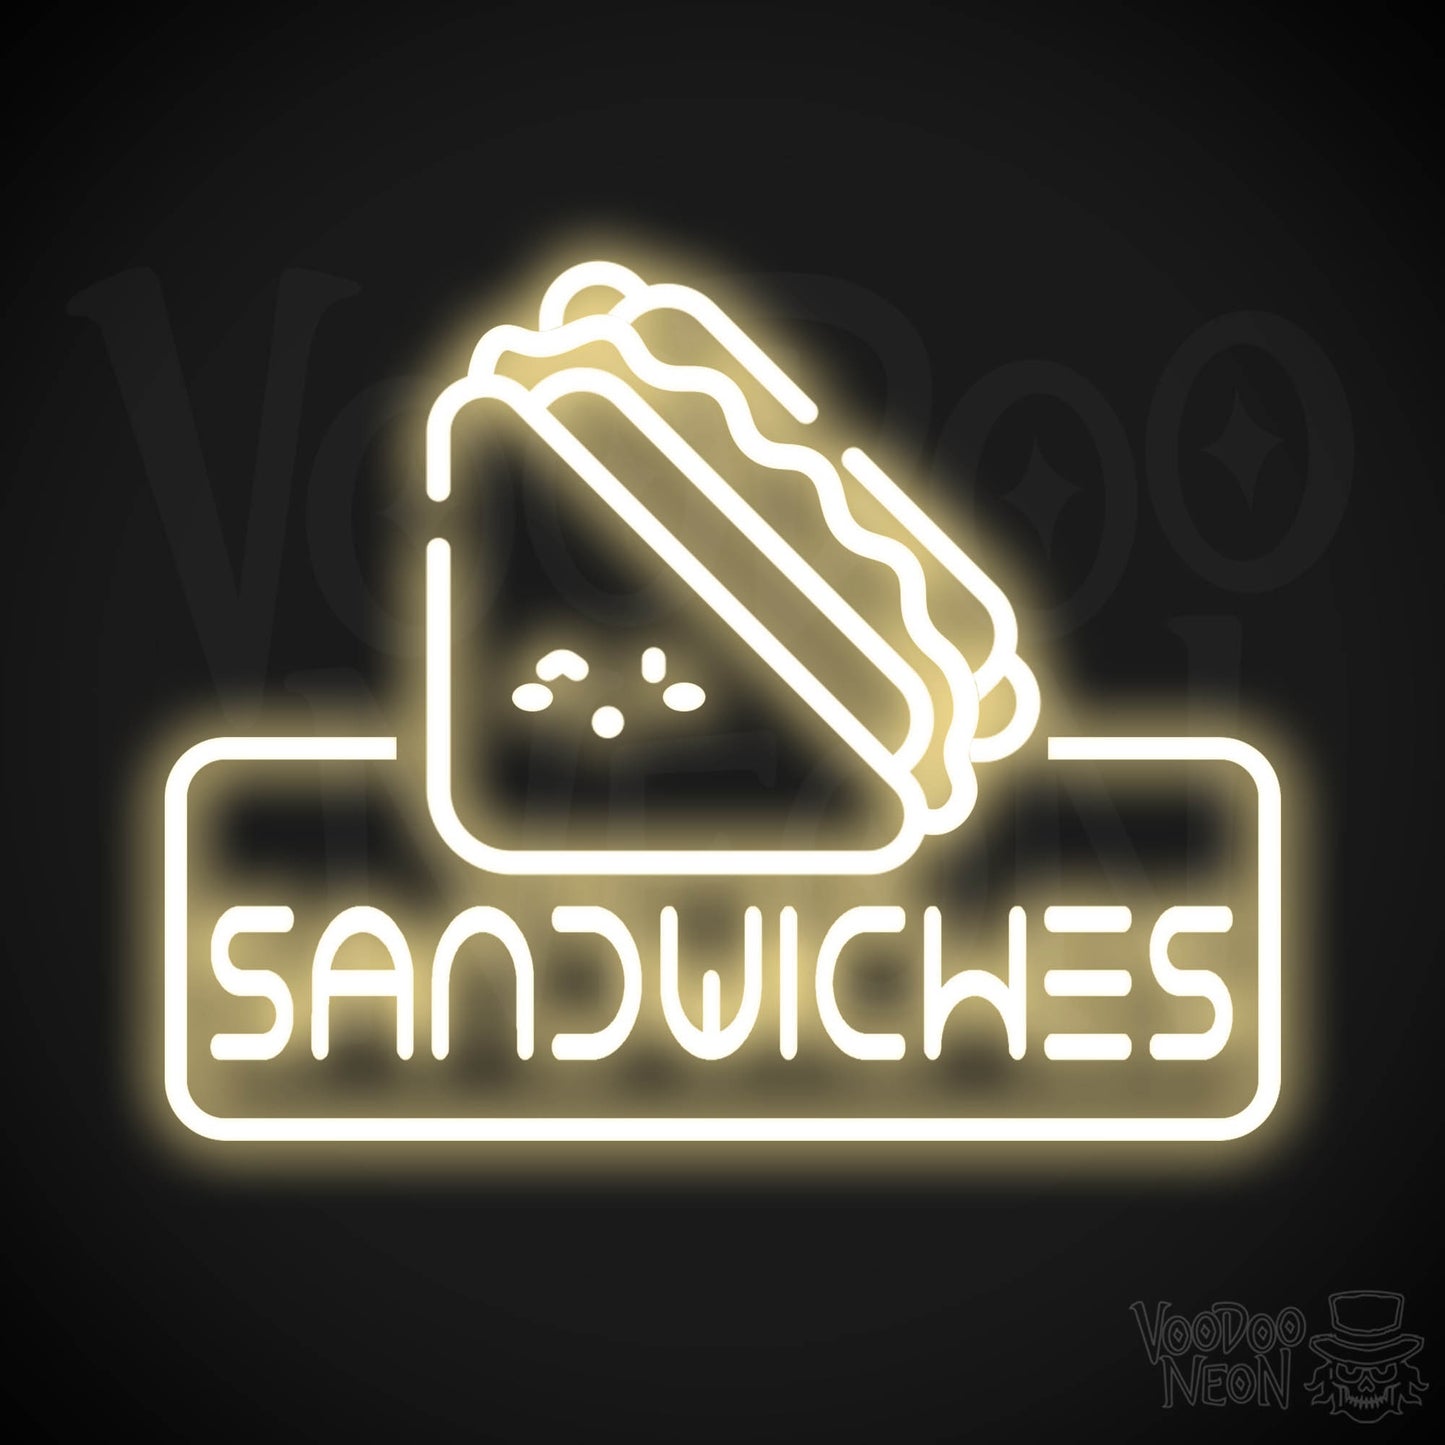 Neon Sandwiches Sign - Sandwich Neon Sign - Neon Sandwich Shop Sign - Color Warm White